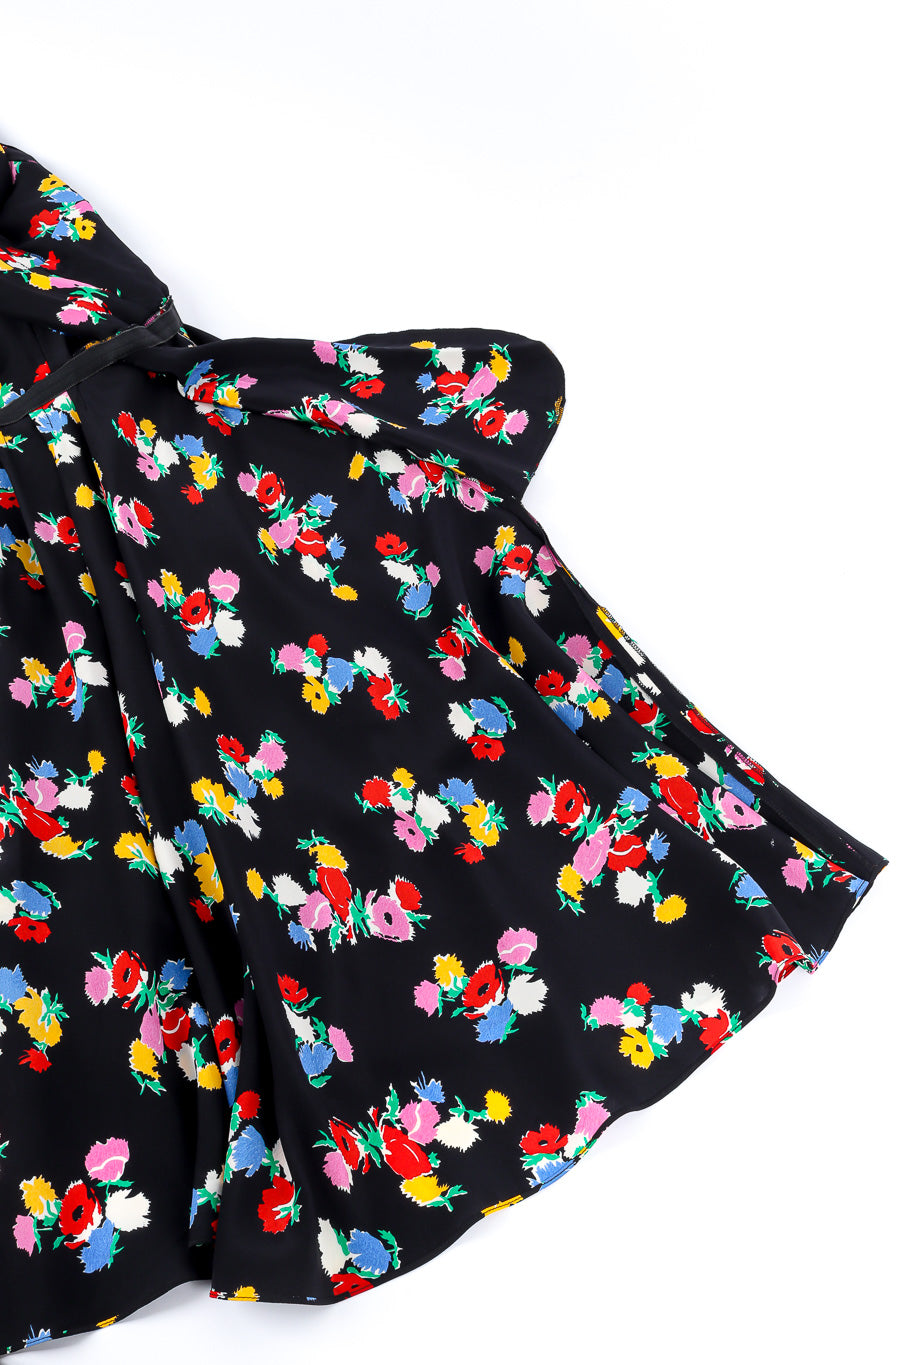 Nina Ricci silk floral print dress fabric detail @recessla